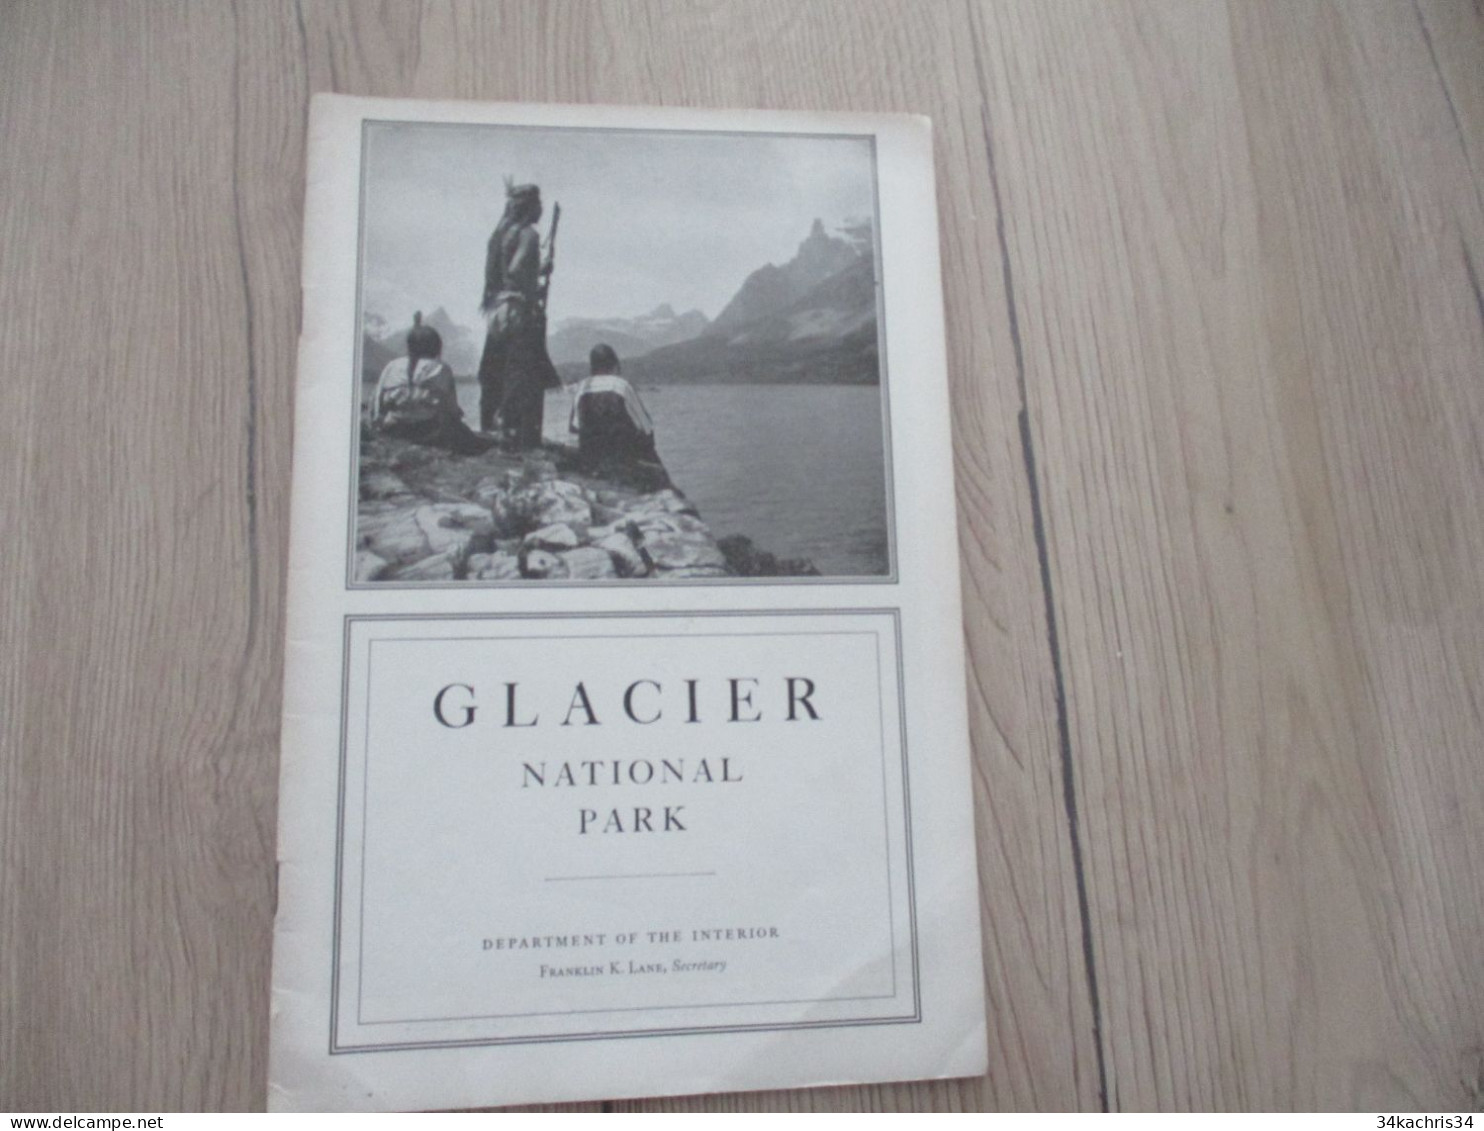 Guide En Anglais Department Of Interior Texte Photos Carte Maps Vers 1920/1930 Glacier Indiens National Park 20p - 1900-1949